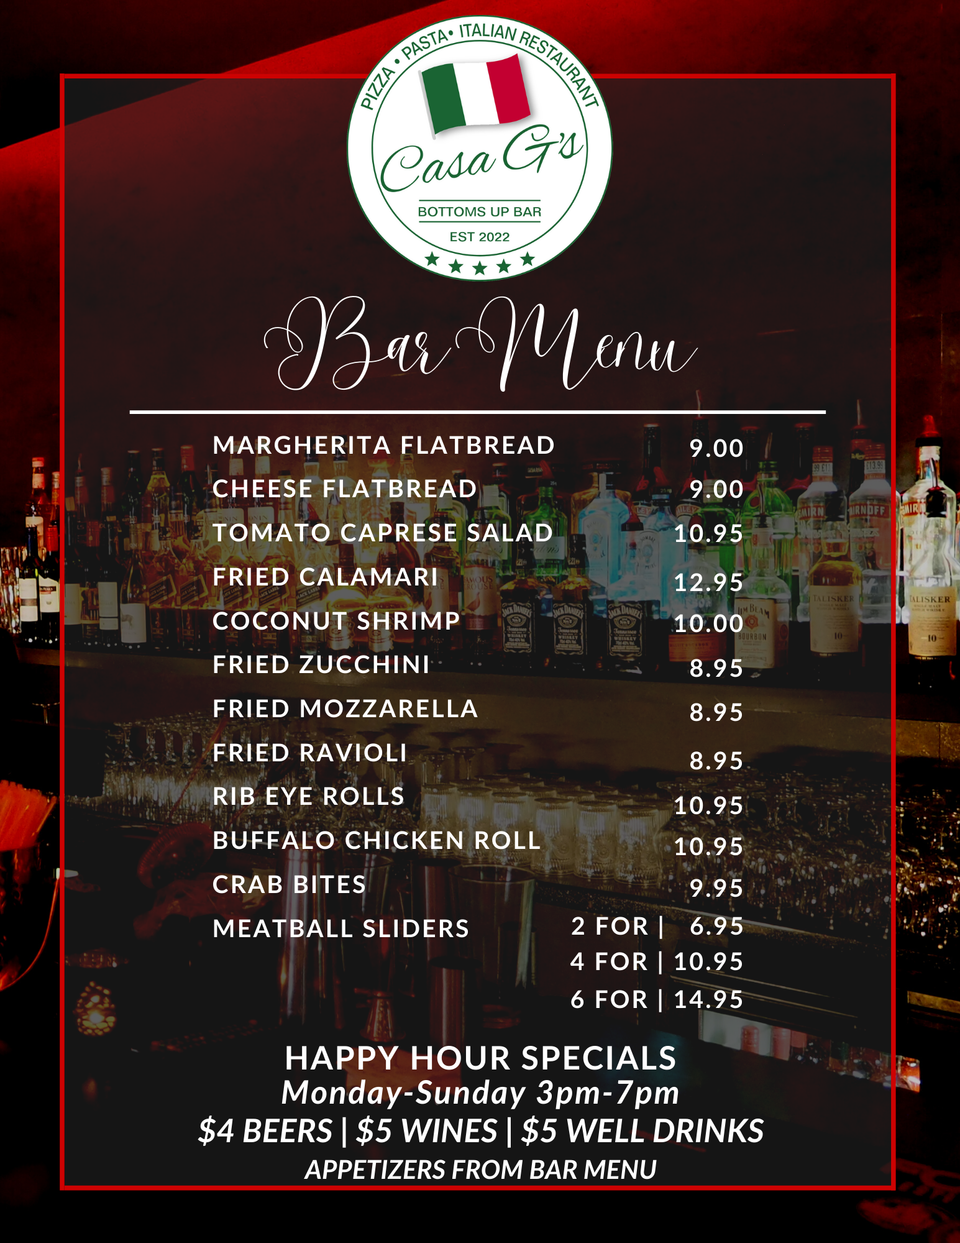 Casa g's bar menu 12 3 22